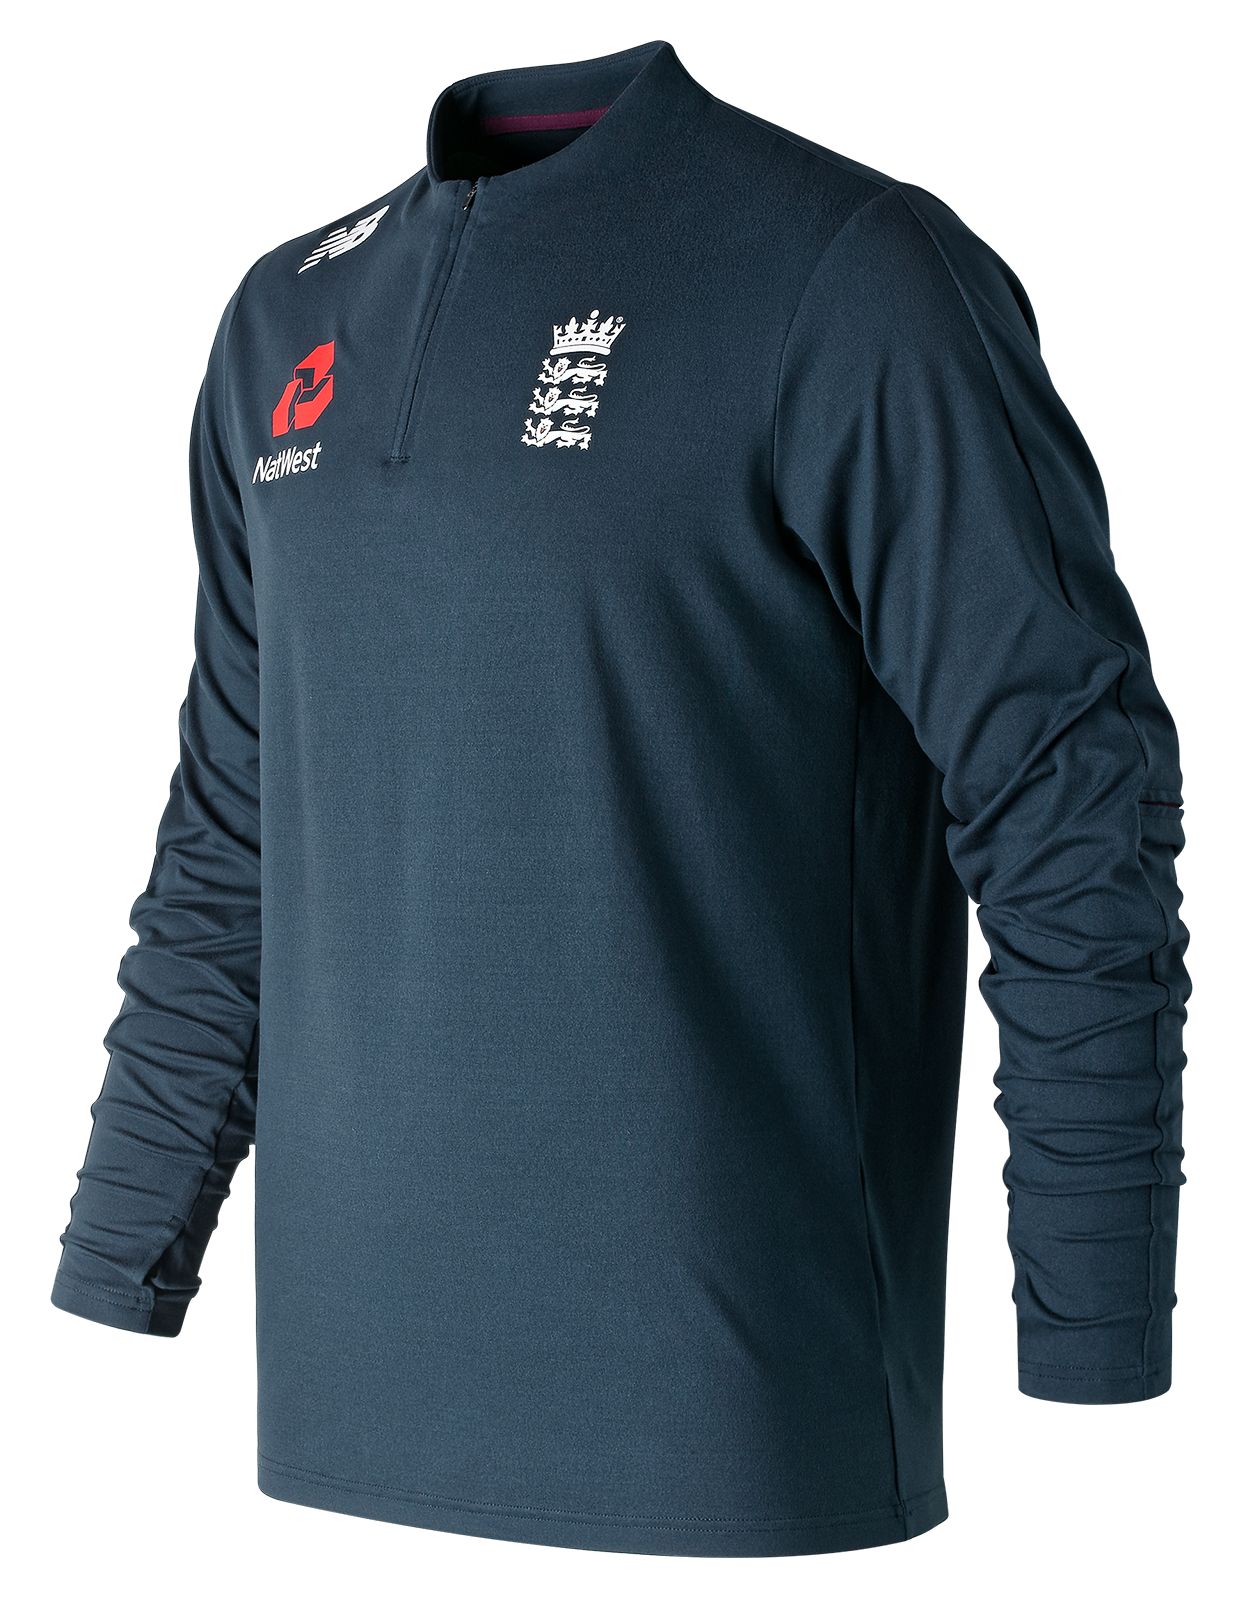 england cricket practice jersey